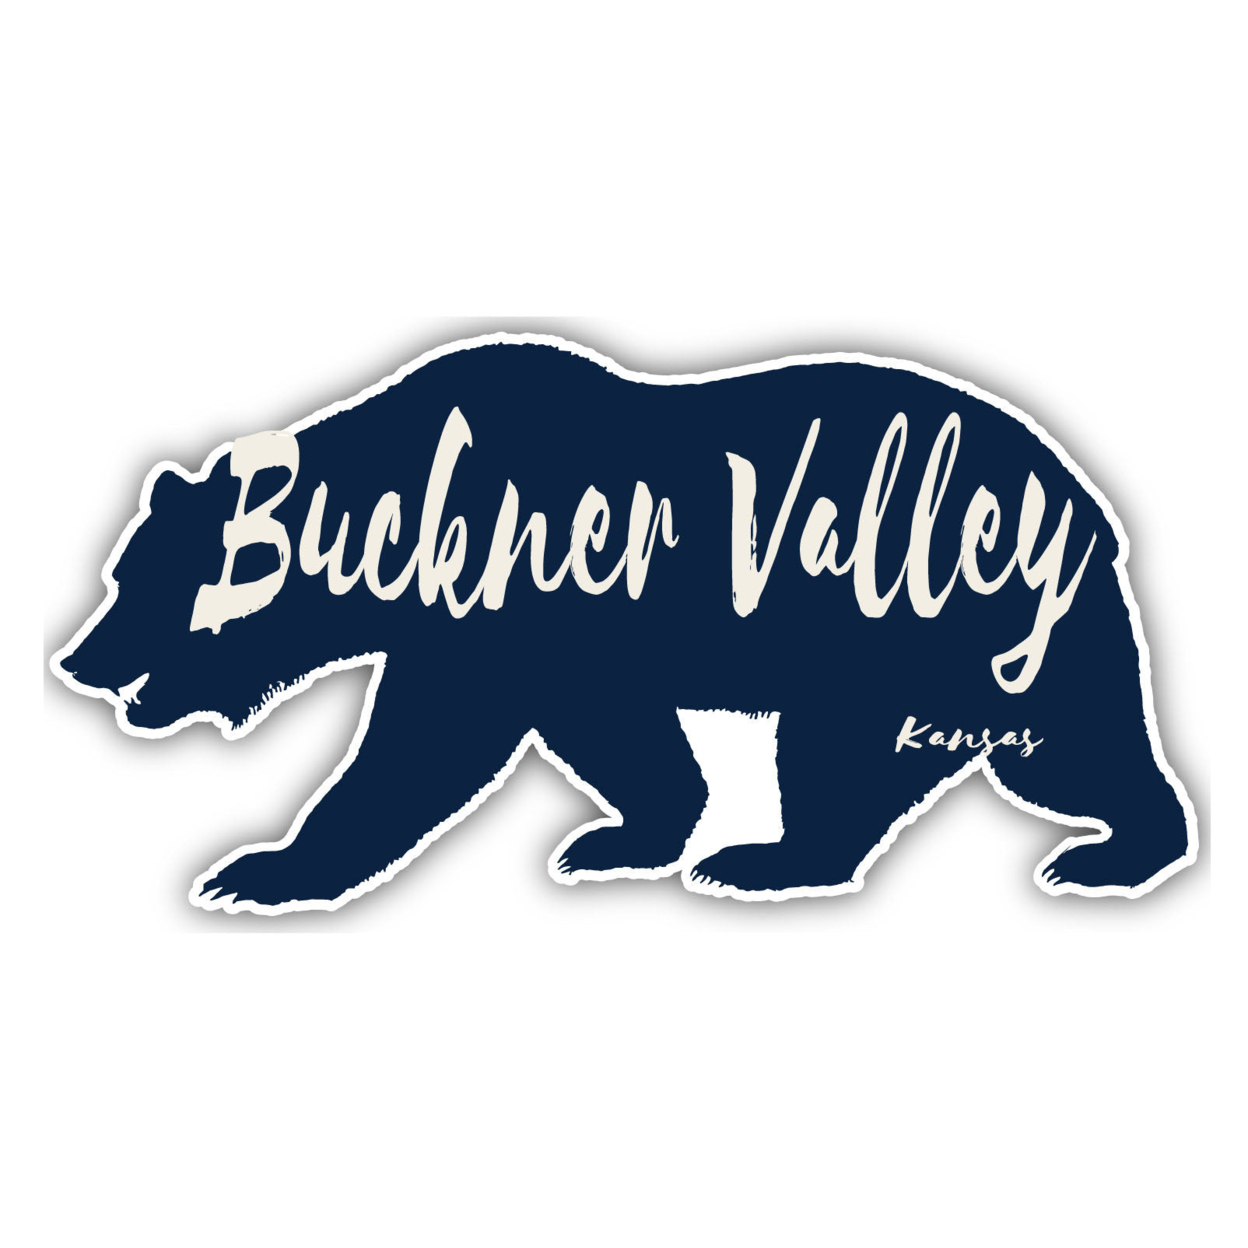 Buckner Valley Kansas Souvenir Decorative Stickers (Choose Theme And Size) - 4-Pack, 10-Inch, Bear